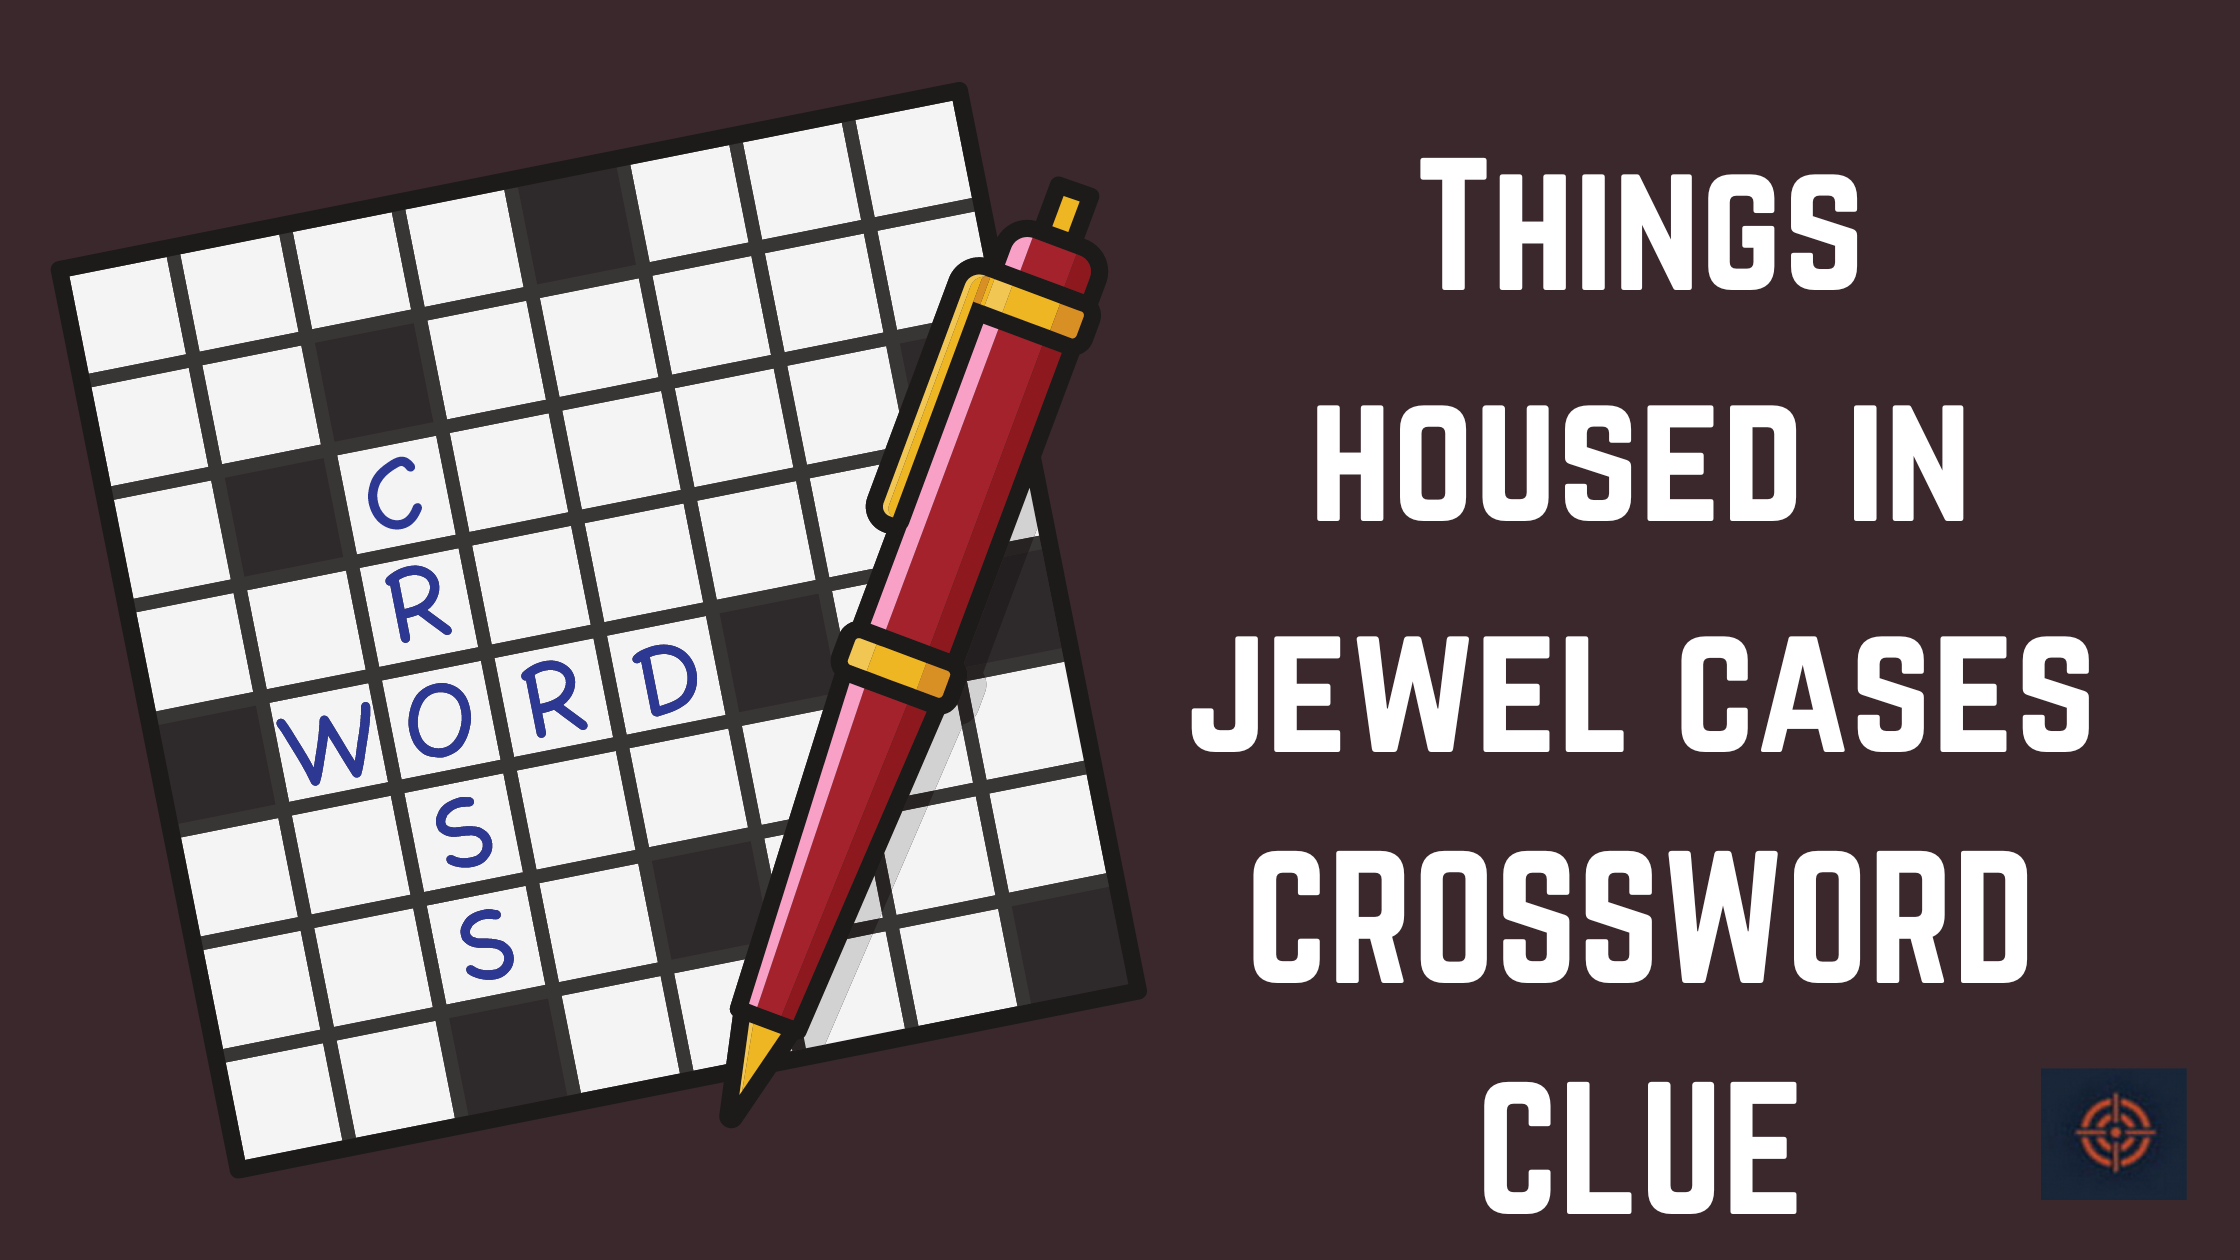 Things housed in jewel cases Crossword Clue